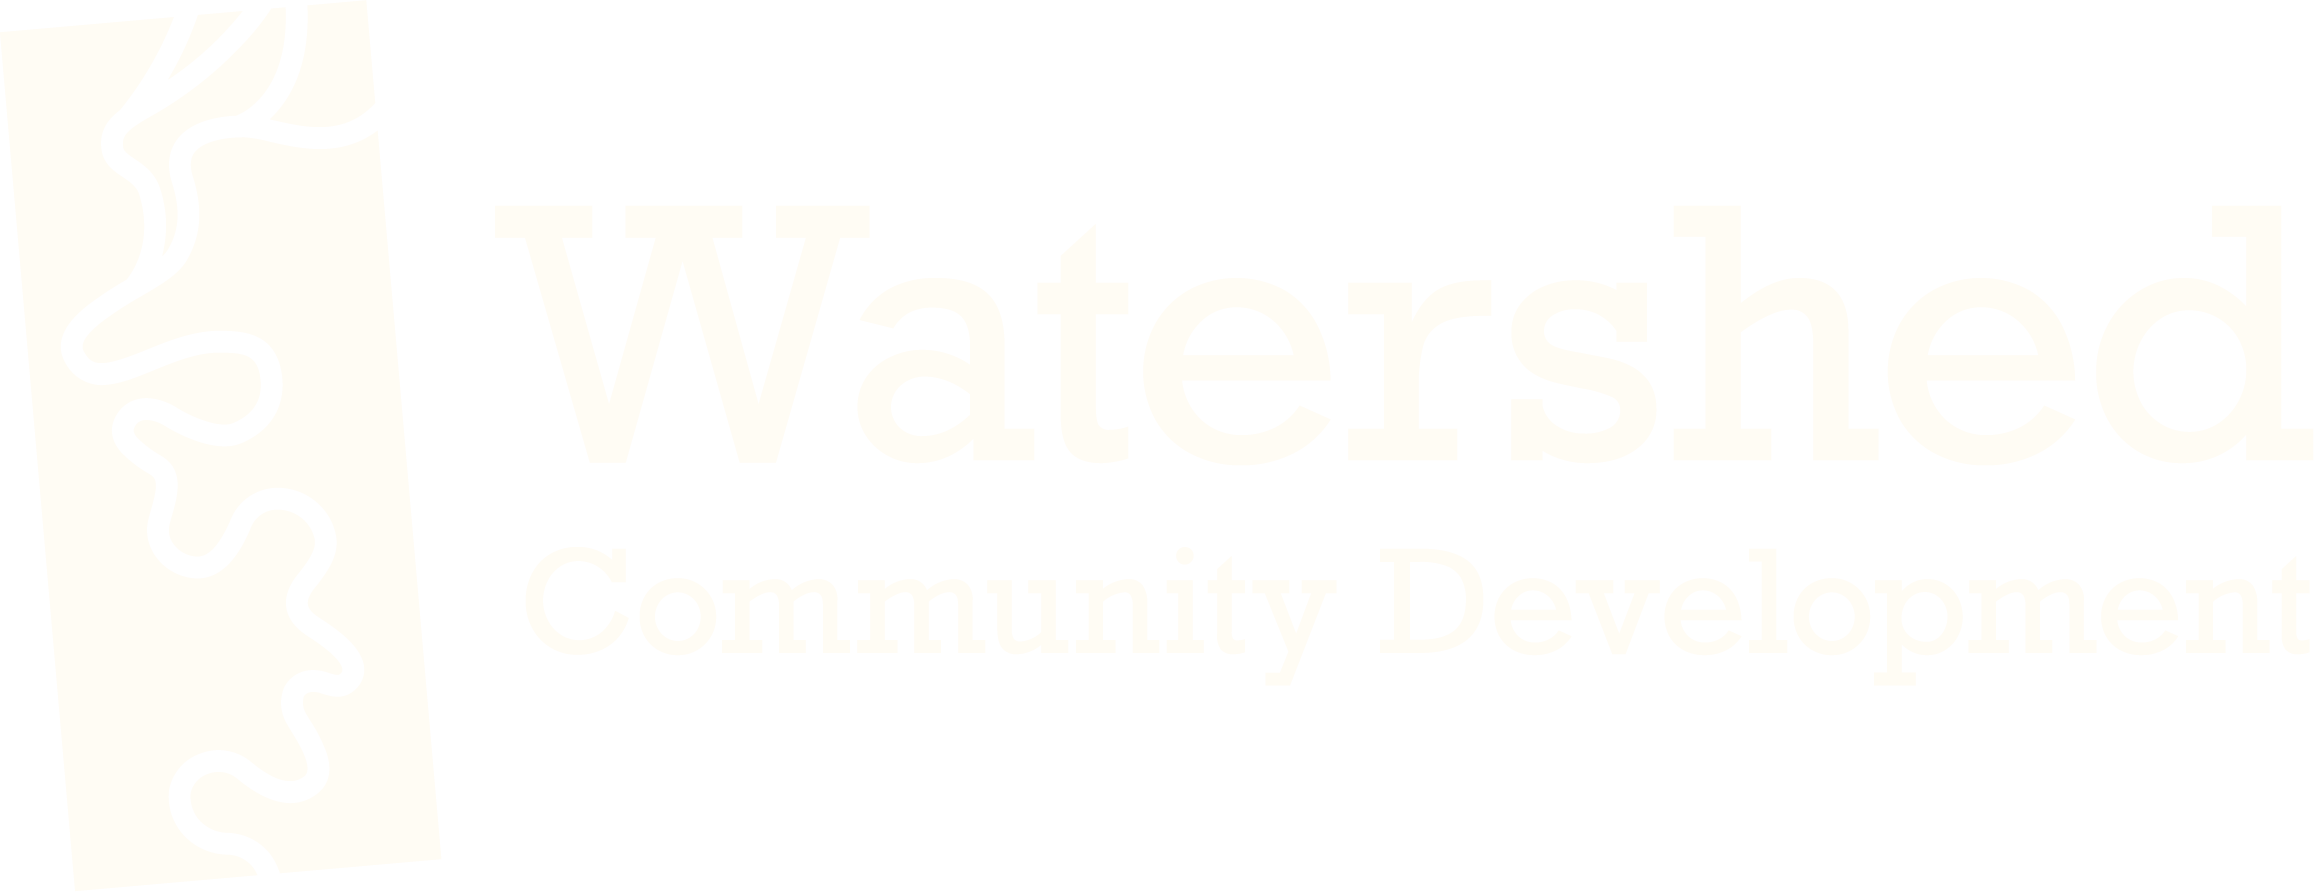 Watershed Community Development